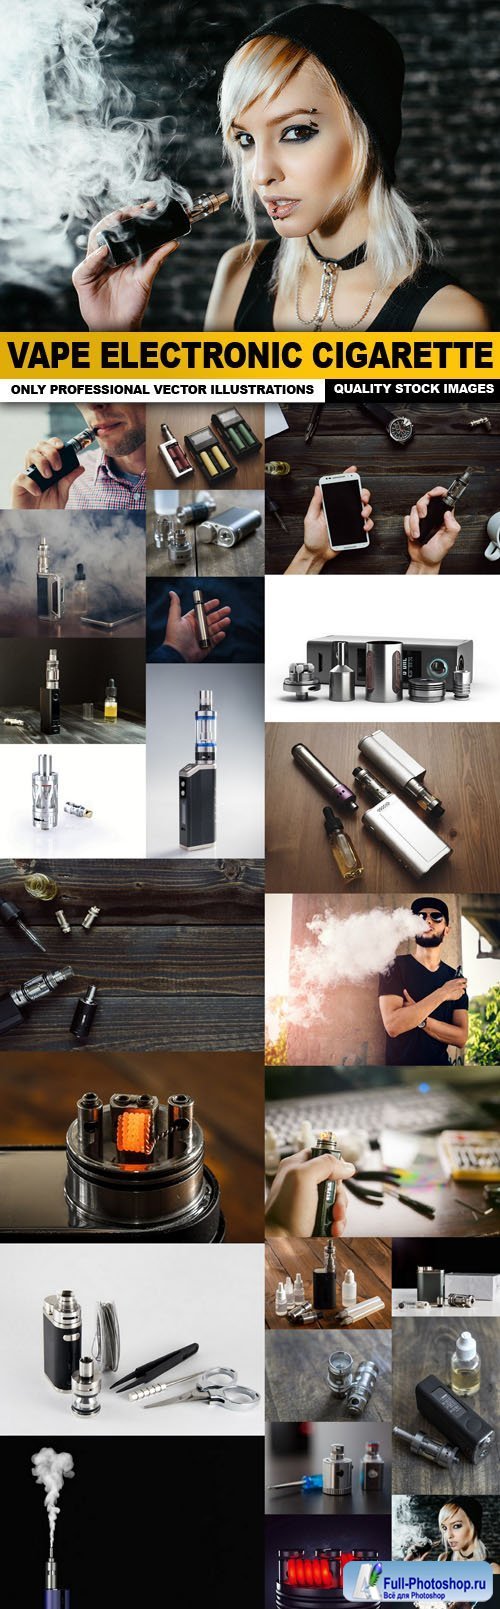 Vape Electronic Cigarette - 25 HQ Images